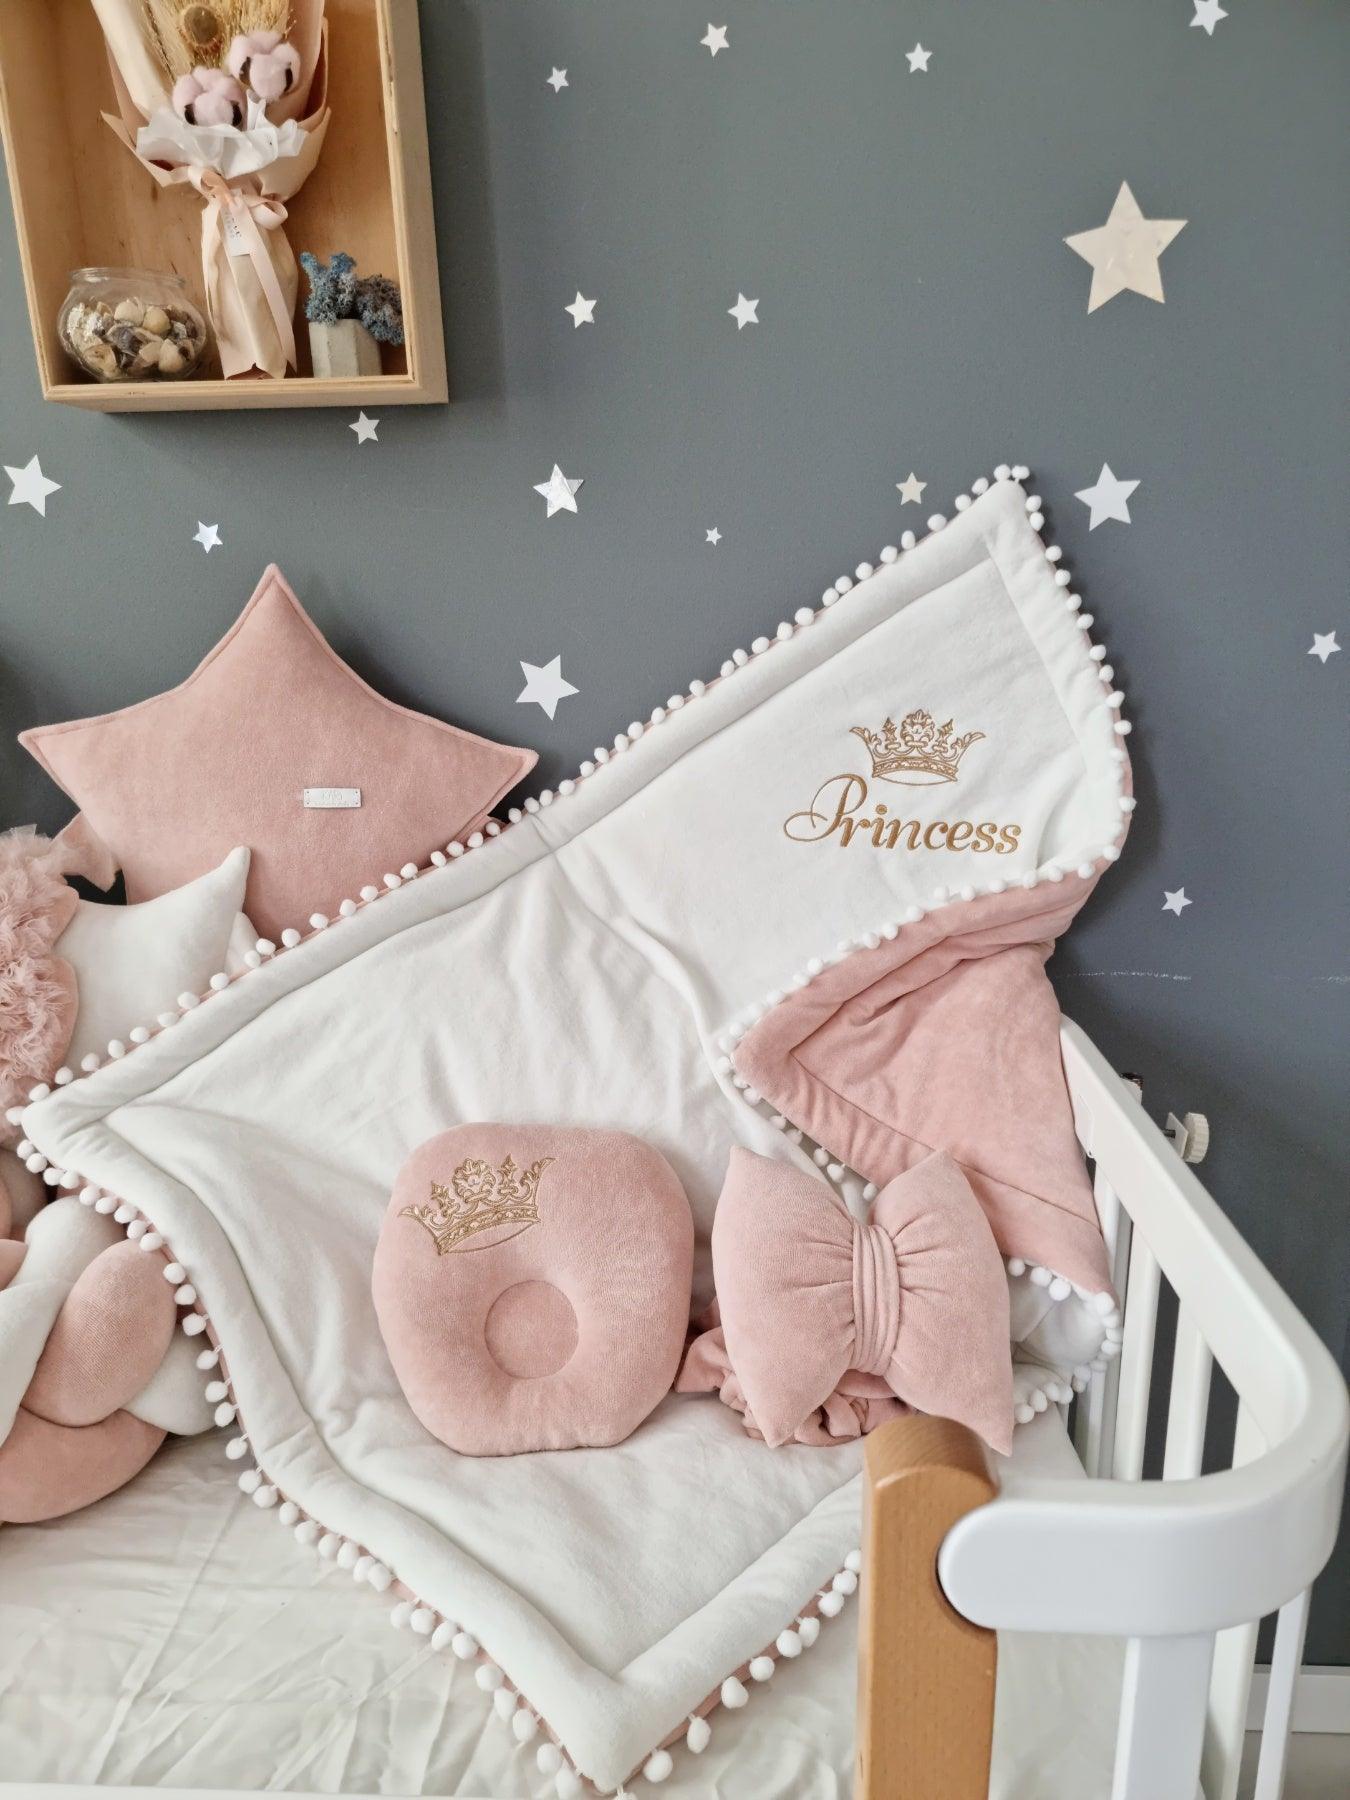 Baby Bedding, Baby Pillows